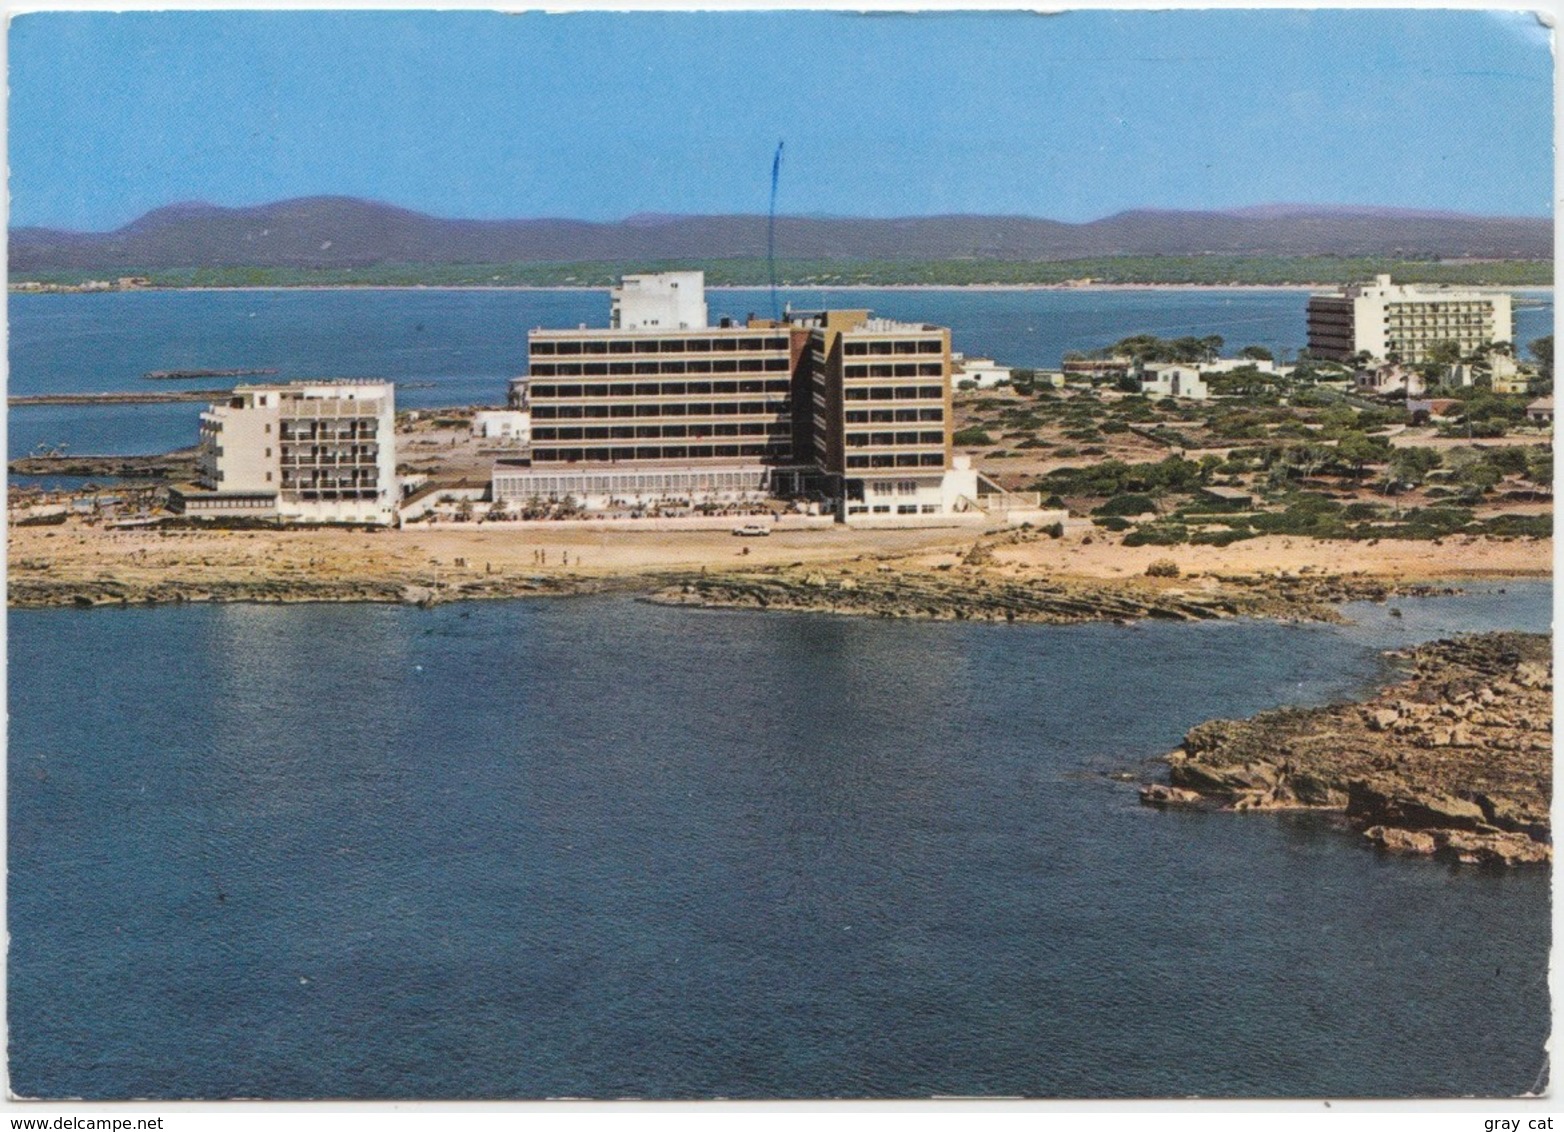 Colonia De Sant Jordi, Mallorca-Baleares, Spain, Espana, 1973 Used Postcard [21846] - Mallorca